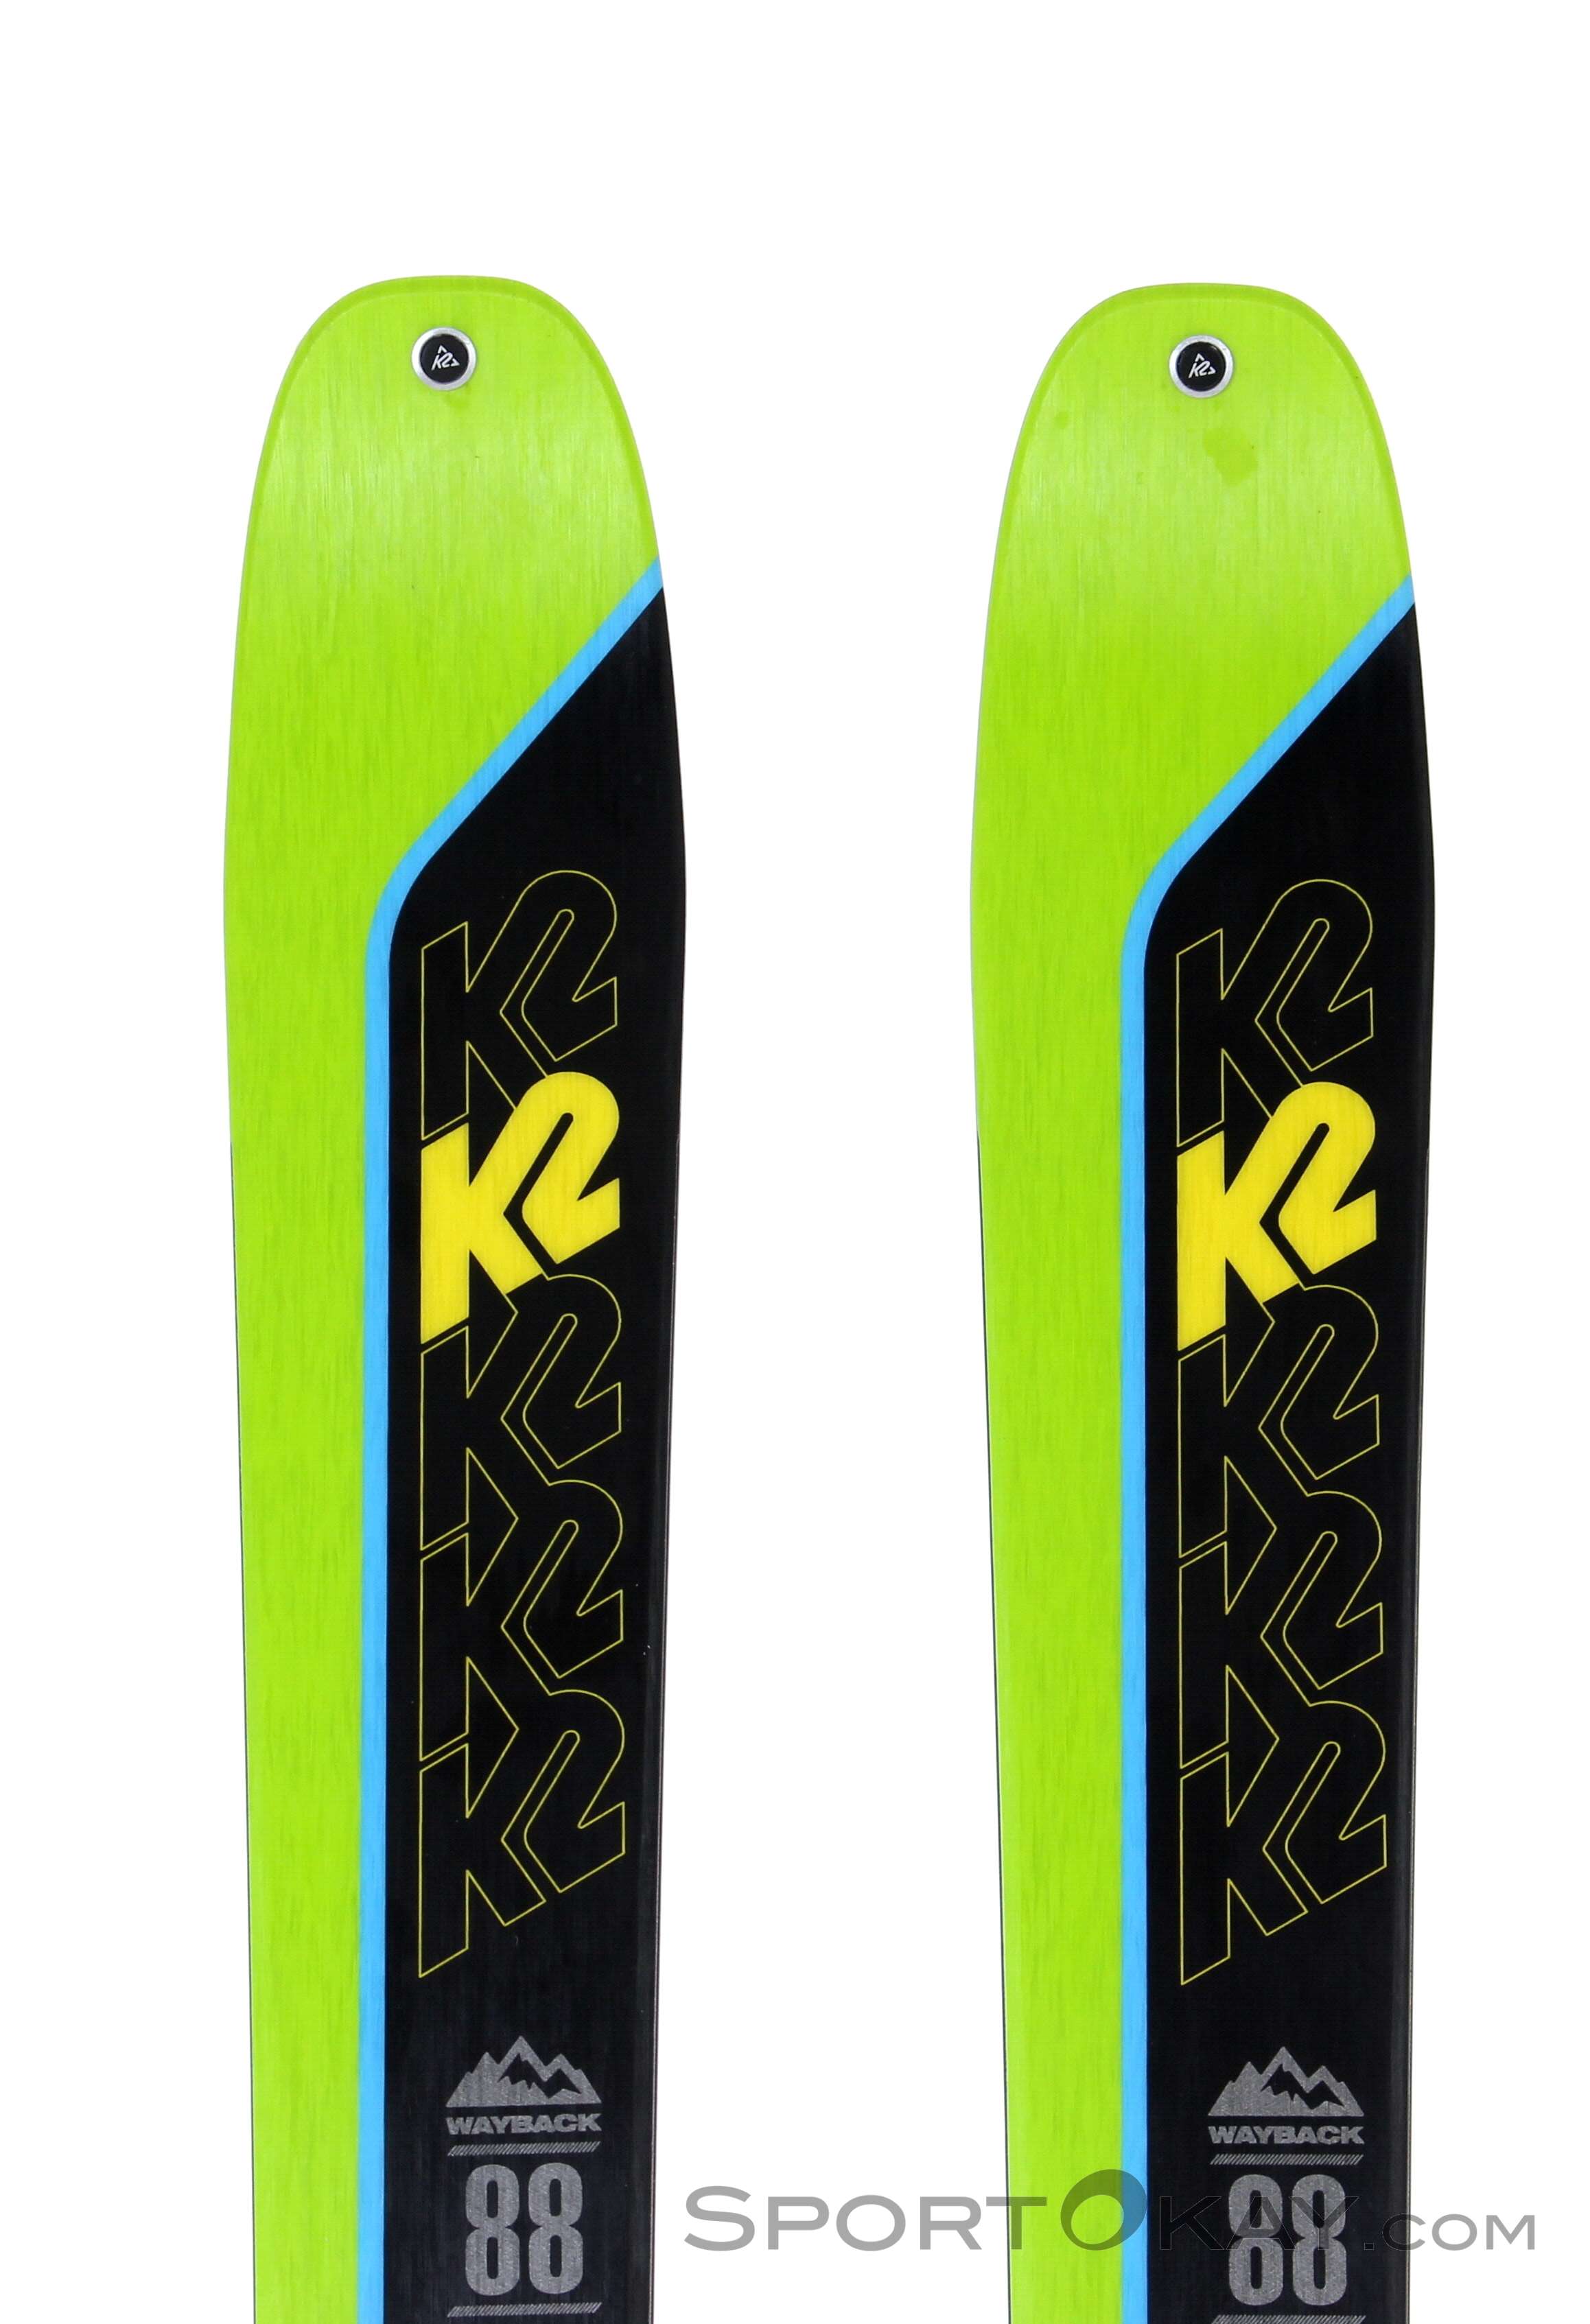 mondo 29 170 cm K2 twintip skis bindings men's 11 Salomon boots 